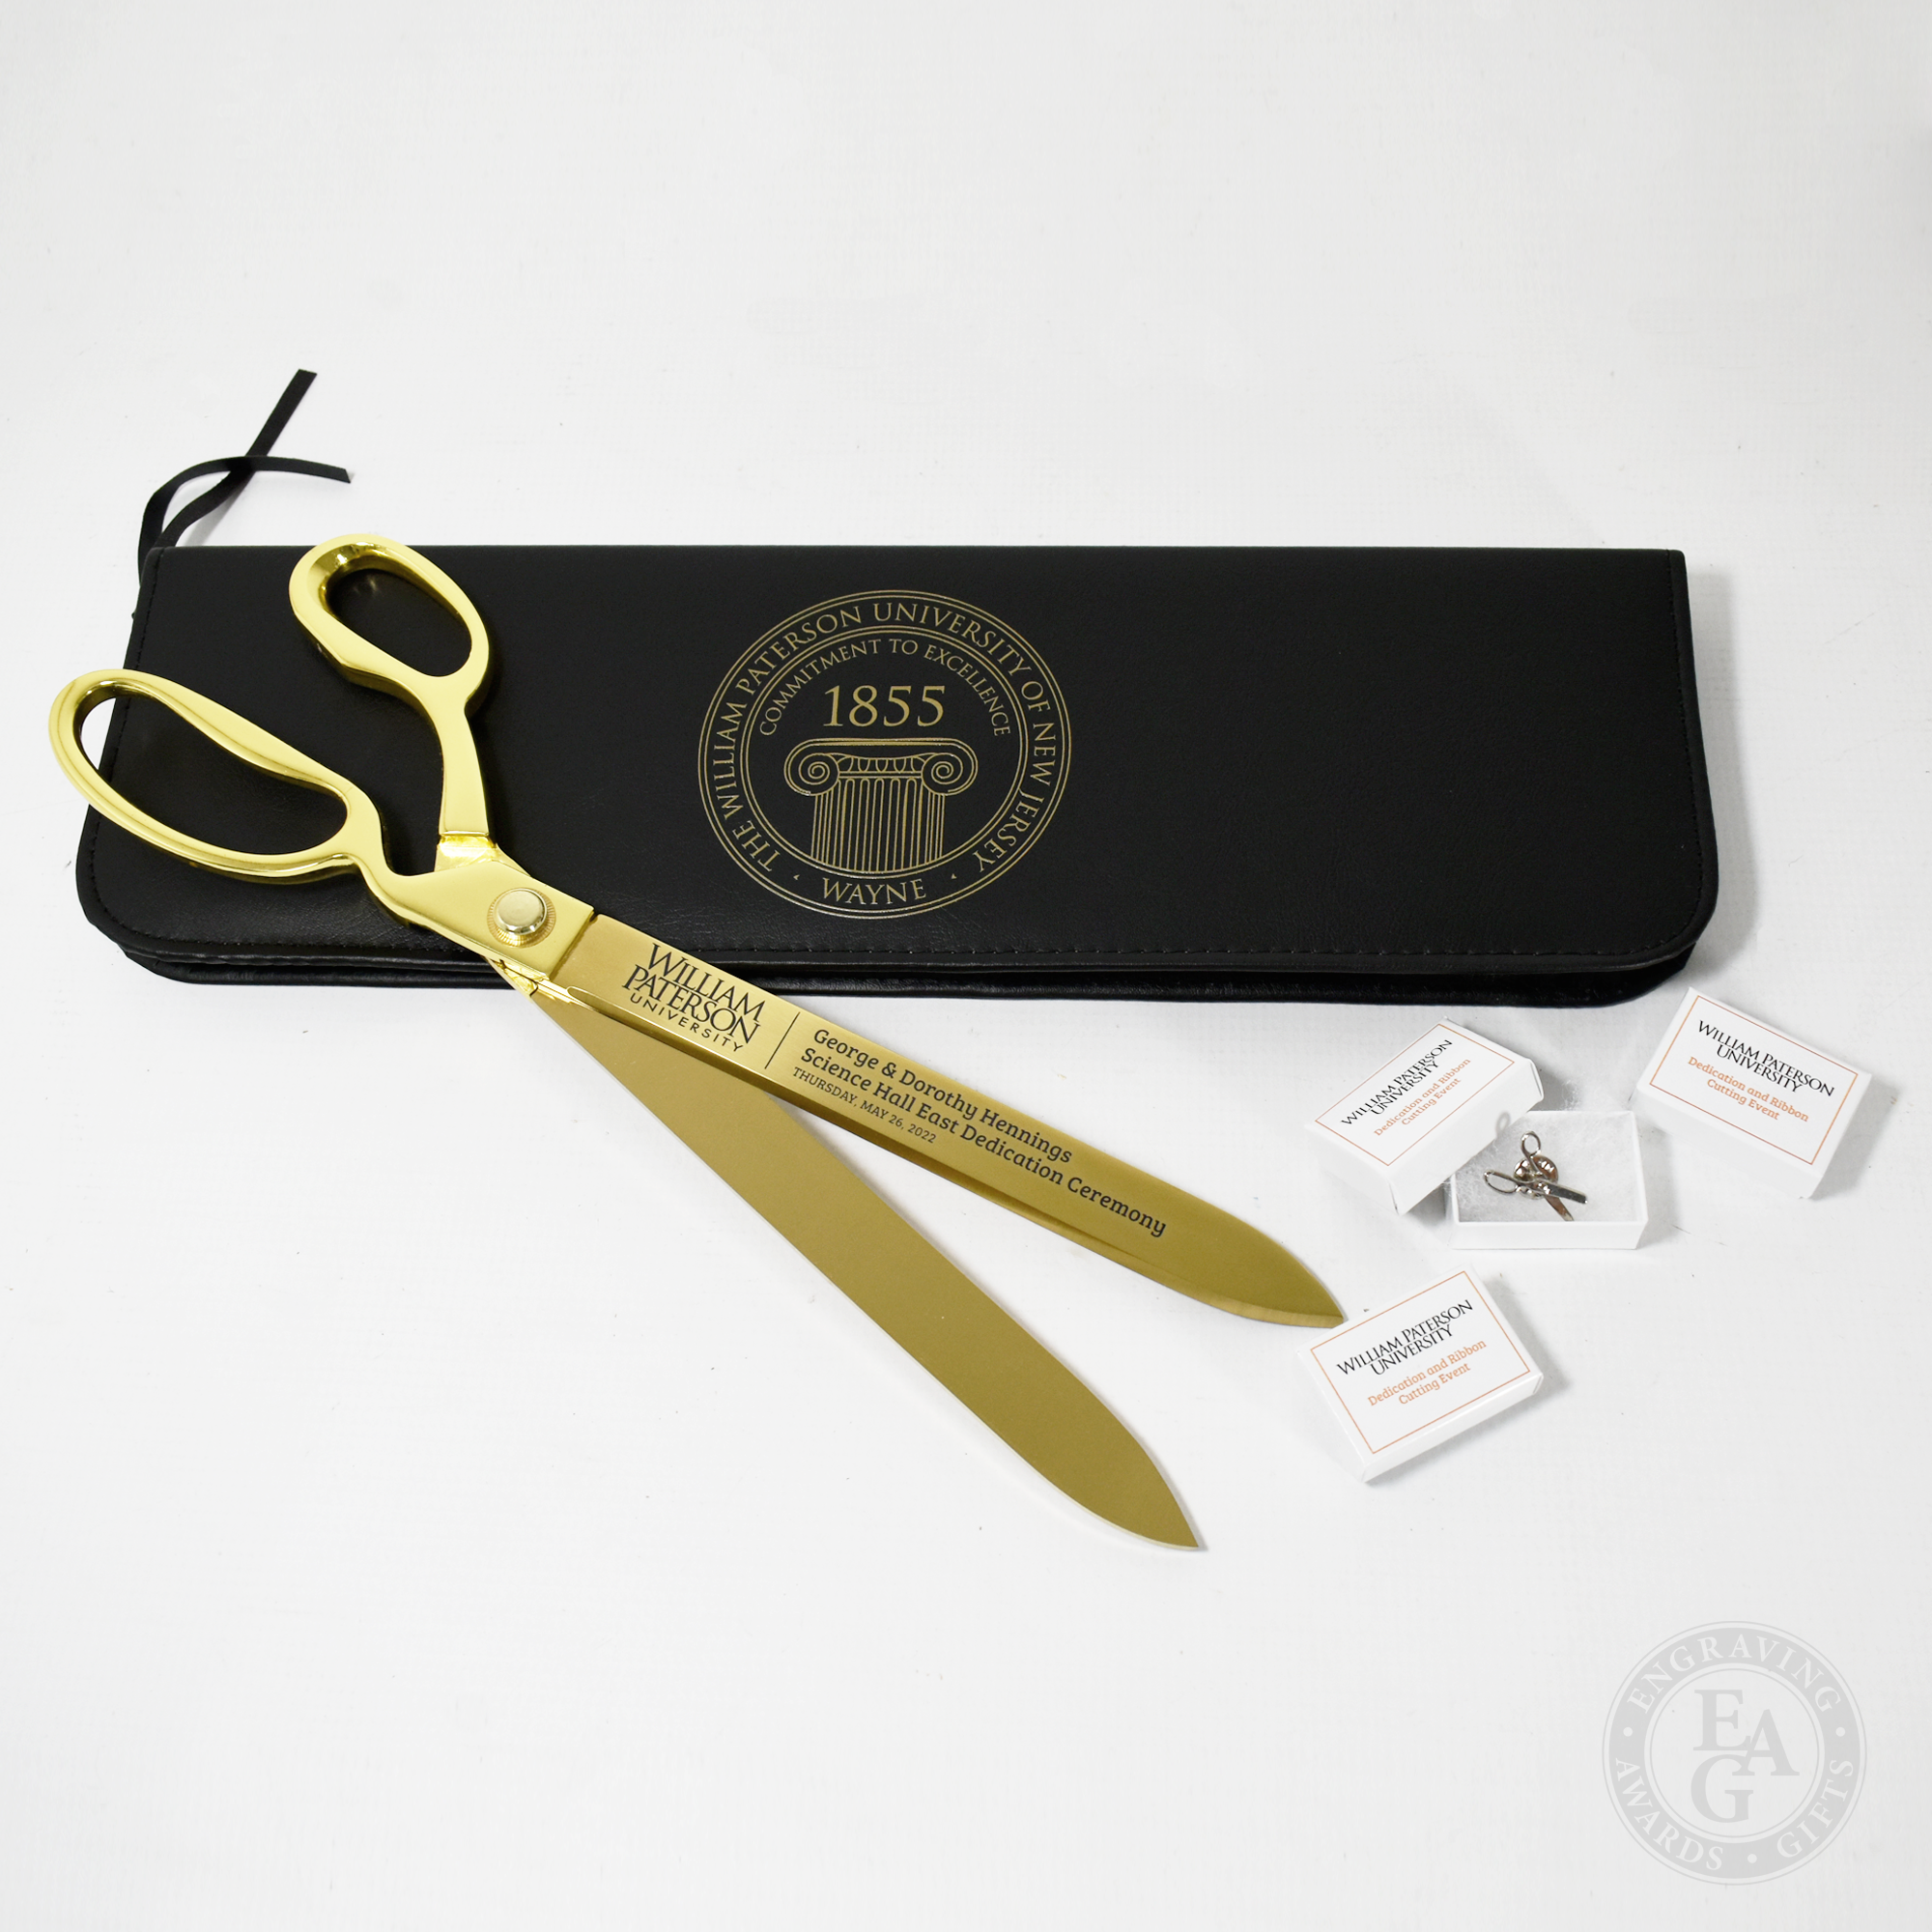 Mini Gold Chrome 6 inch Ceremonial Scissors - Golden Openings